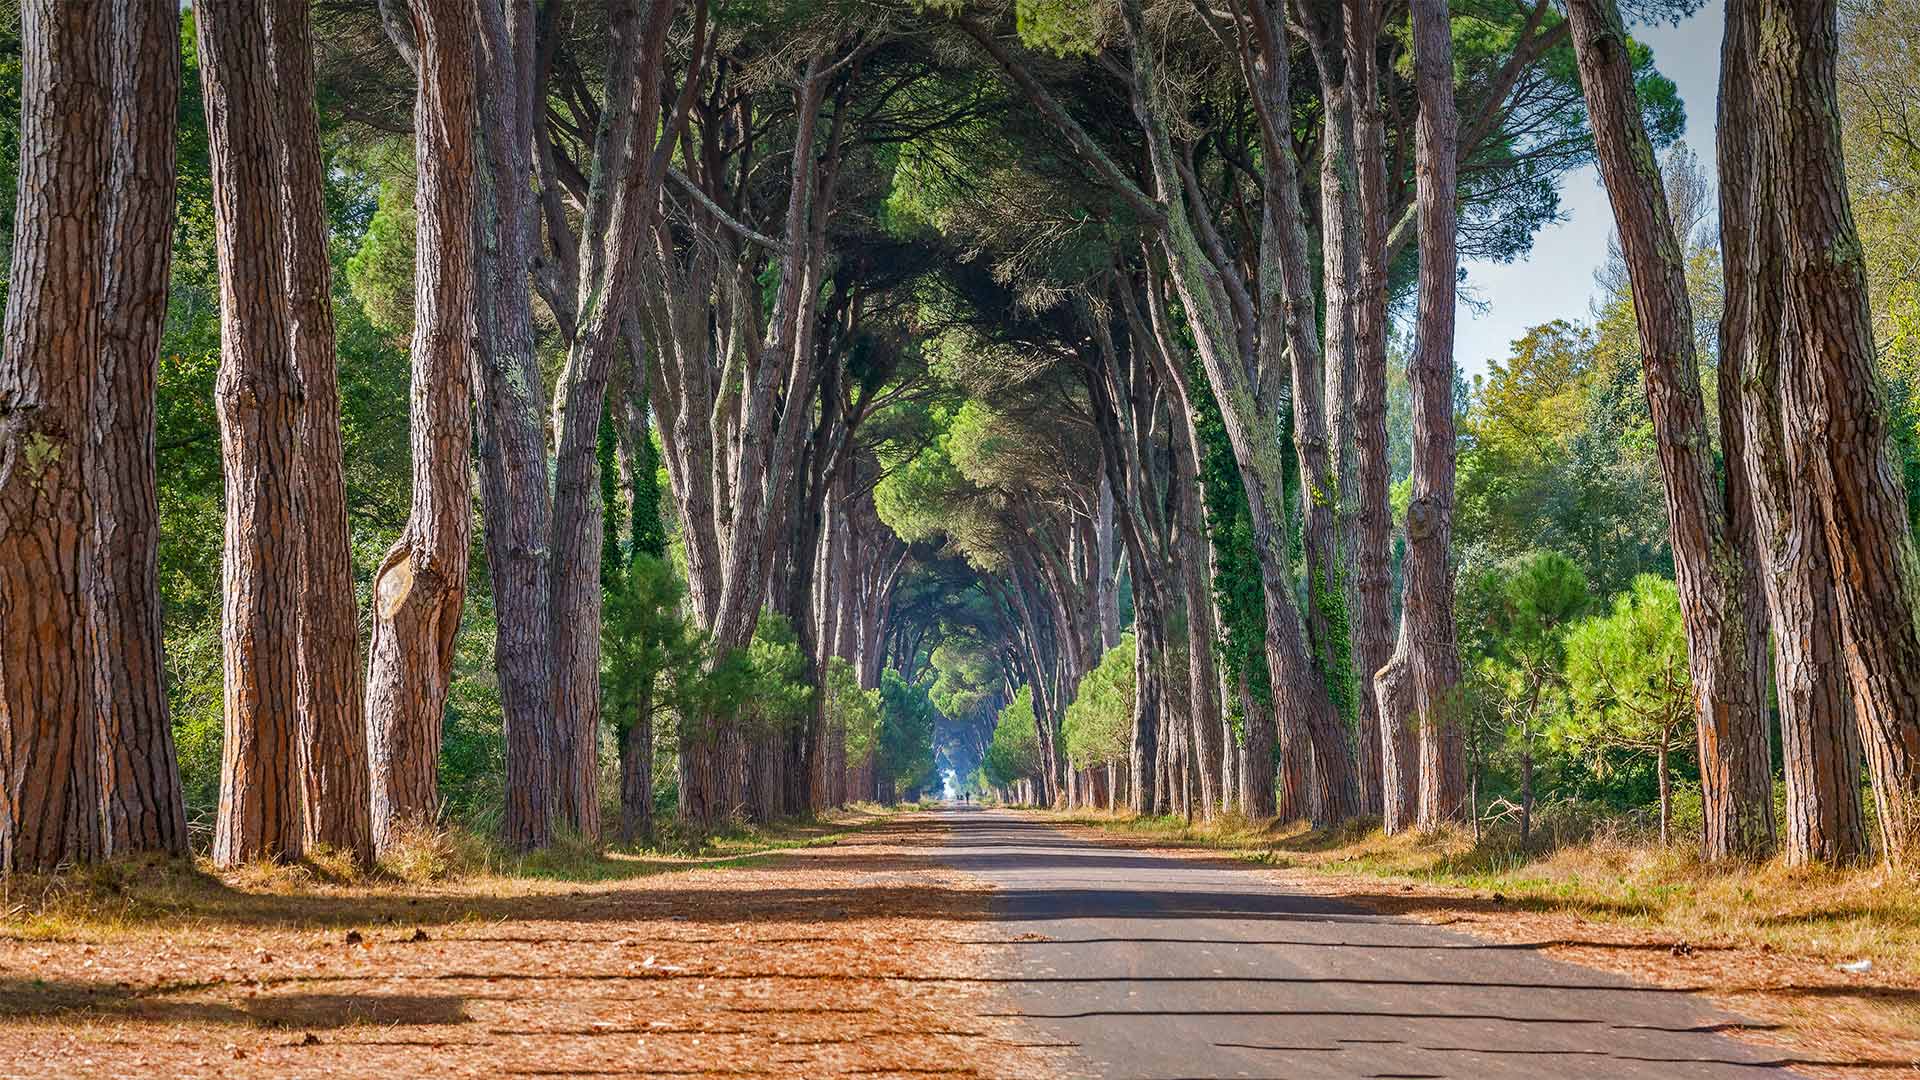 Regional Park of Migliarino, San Rossore, Massaciuccoli, Italy